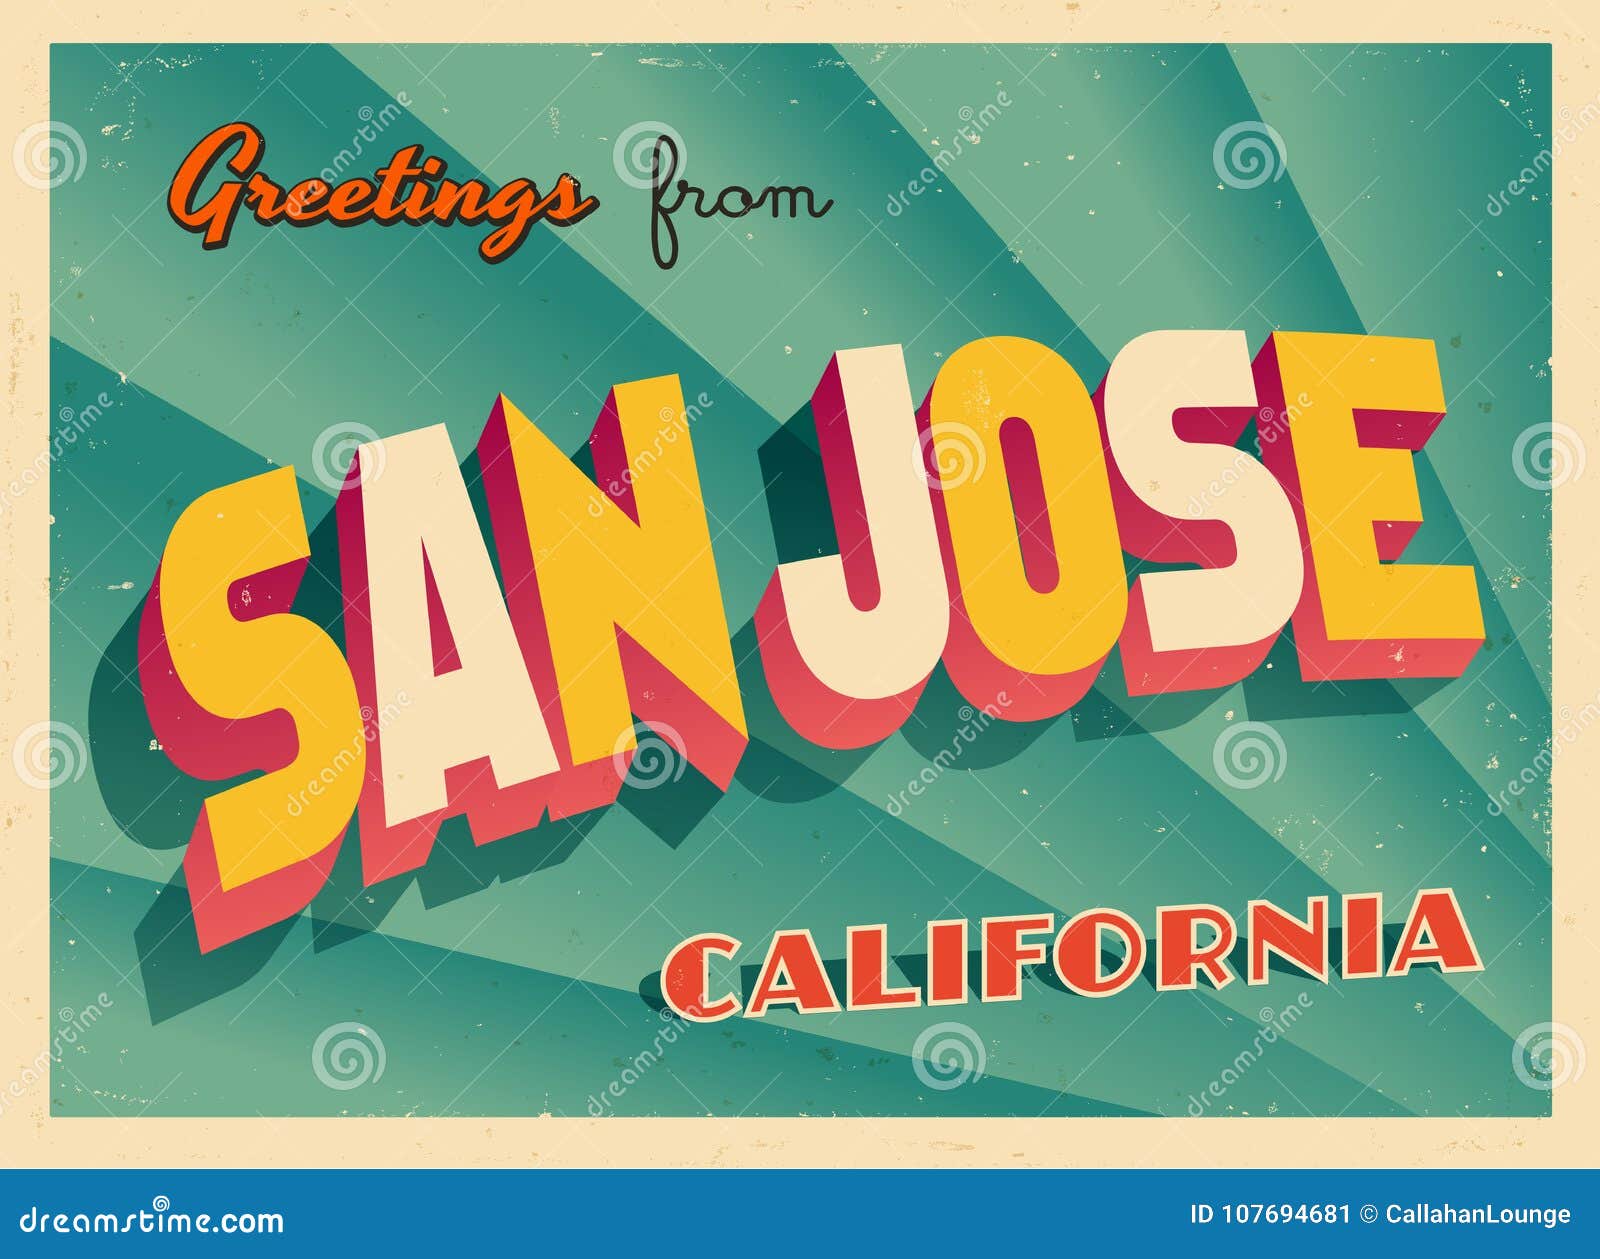 vintage touristic greeting card from san jose, california.